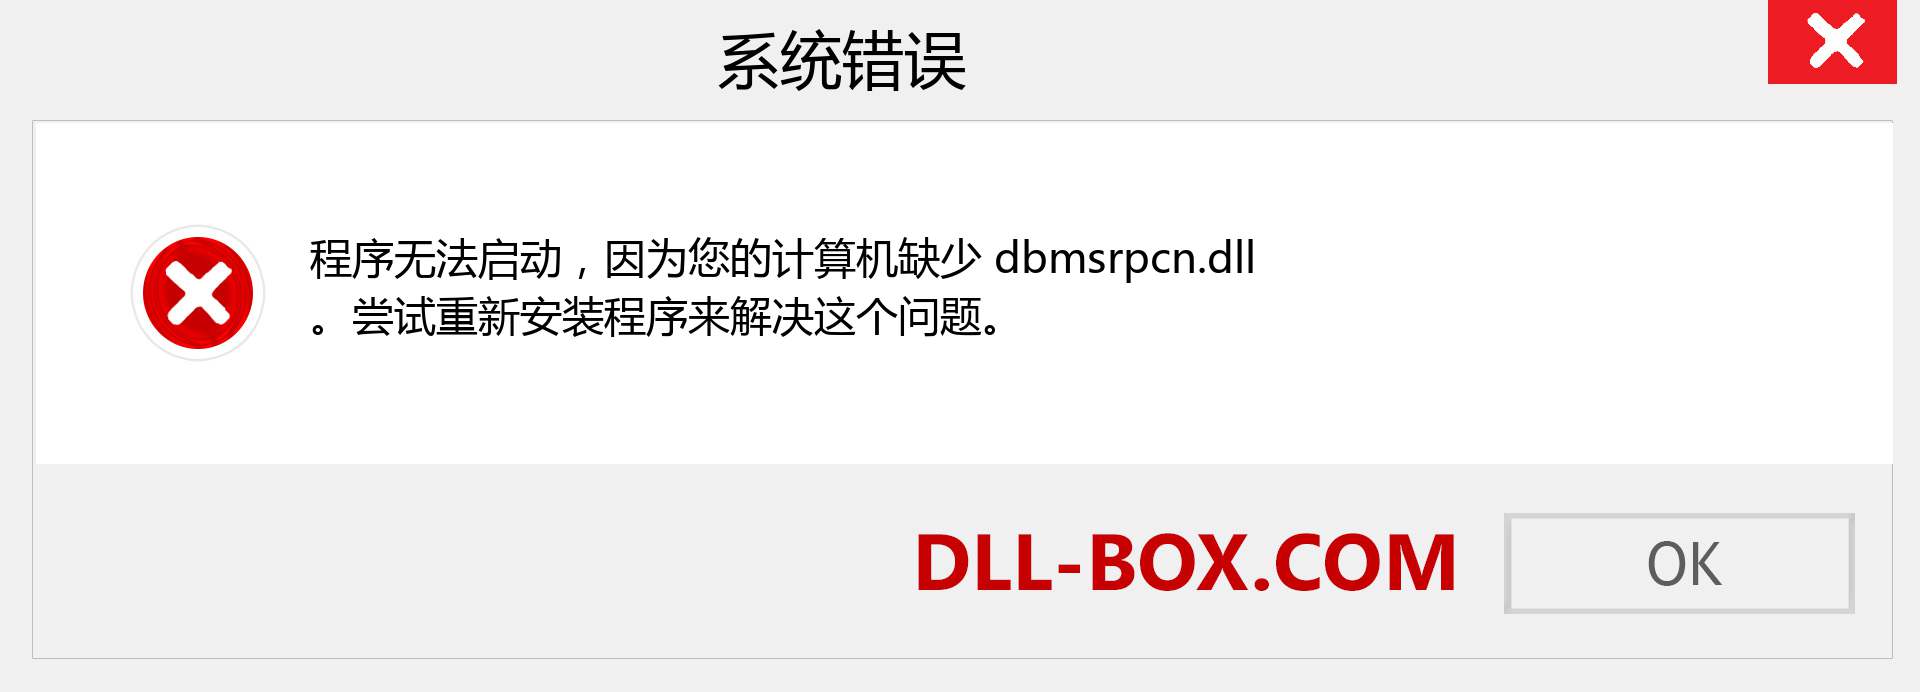 dbmsrpcn.dll 文件丢失？。 适用于 Windows 7、8、10 的下载 - 修复 Windows、照片、图像上的 dbmsrpcn dll 丢失错误